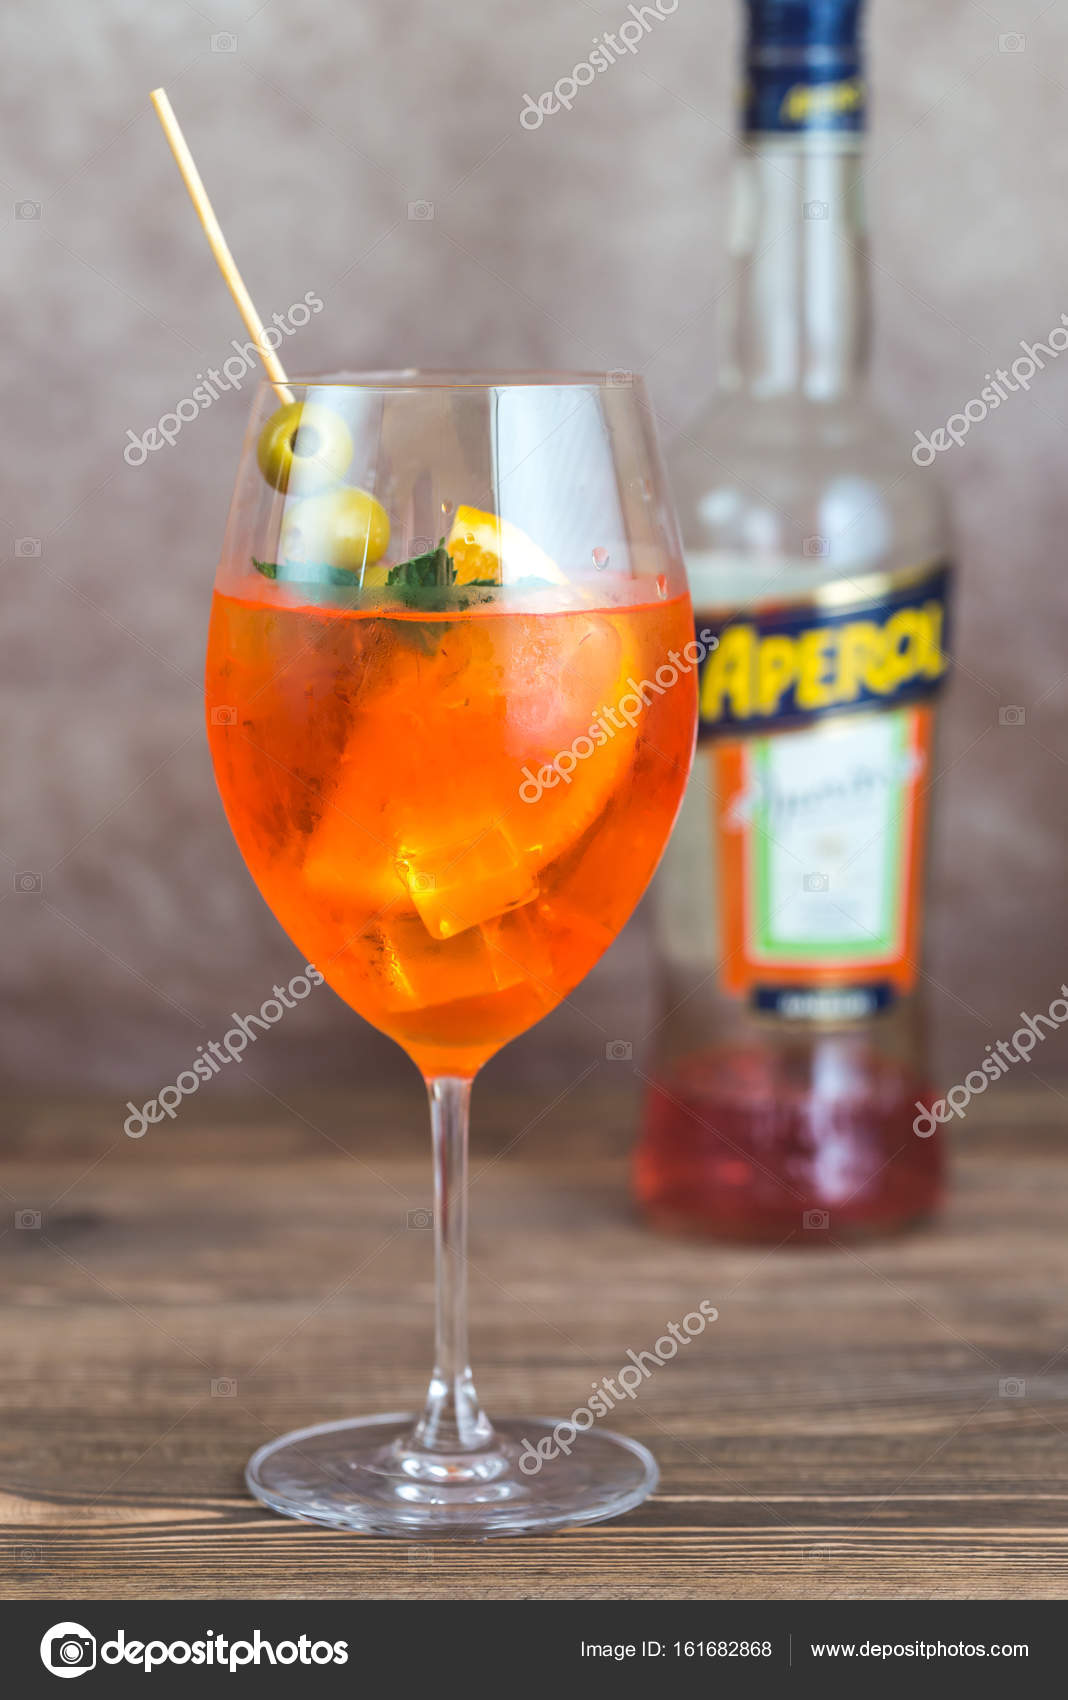 https://st3.depositphotos.com/1998601/16168/i/1600/depositphotos_161682868-stock-photo-glass-of-aperol-spritz-cocktail.jpg